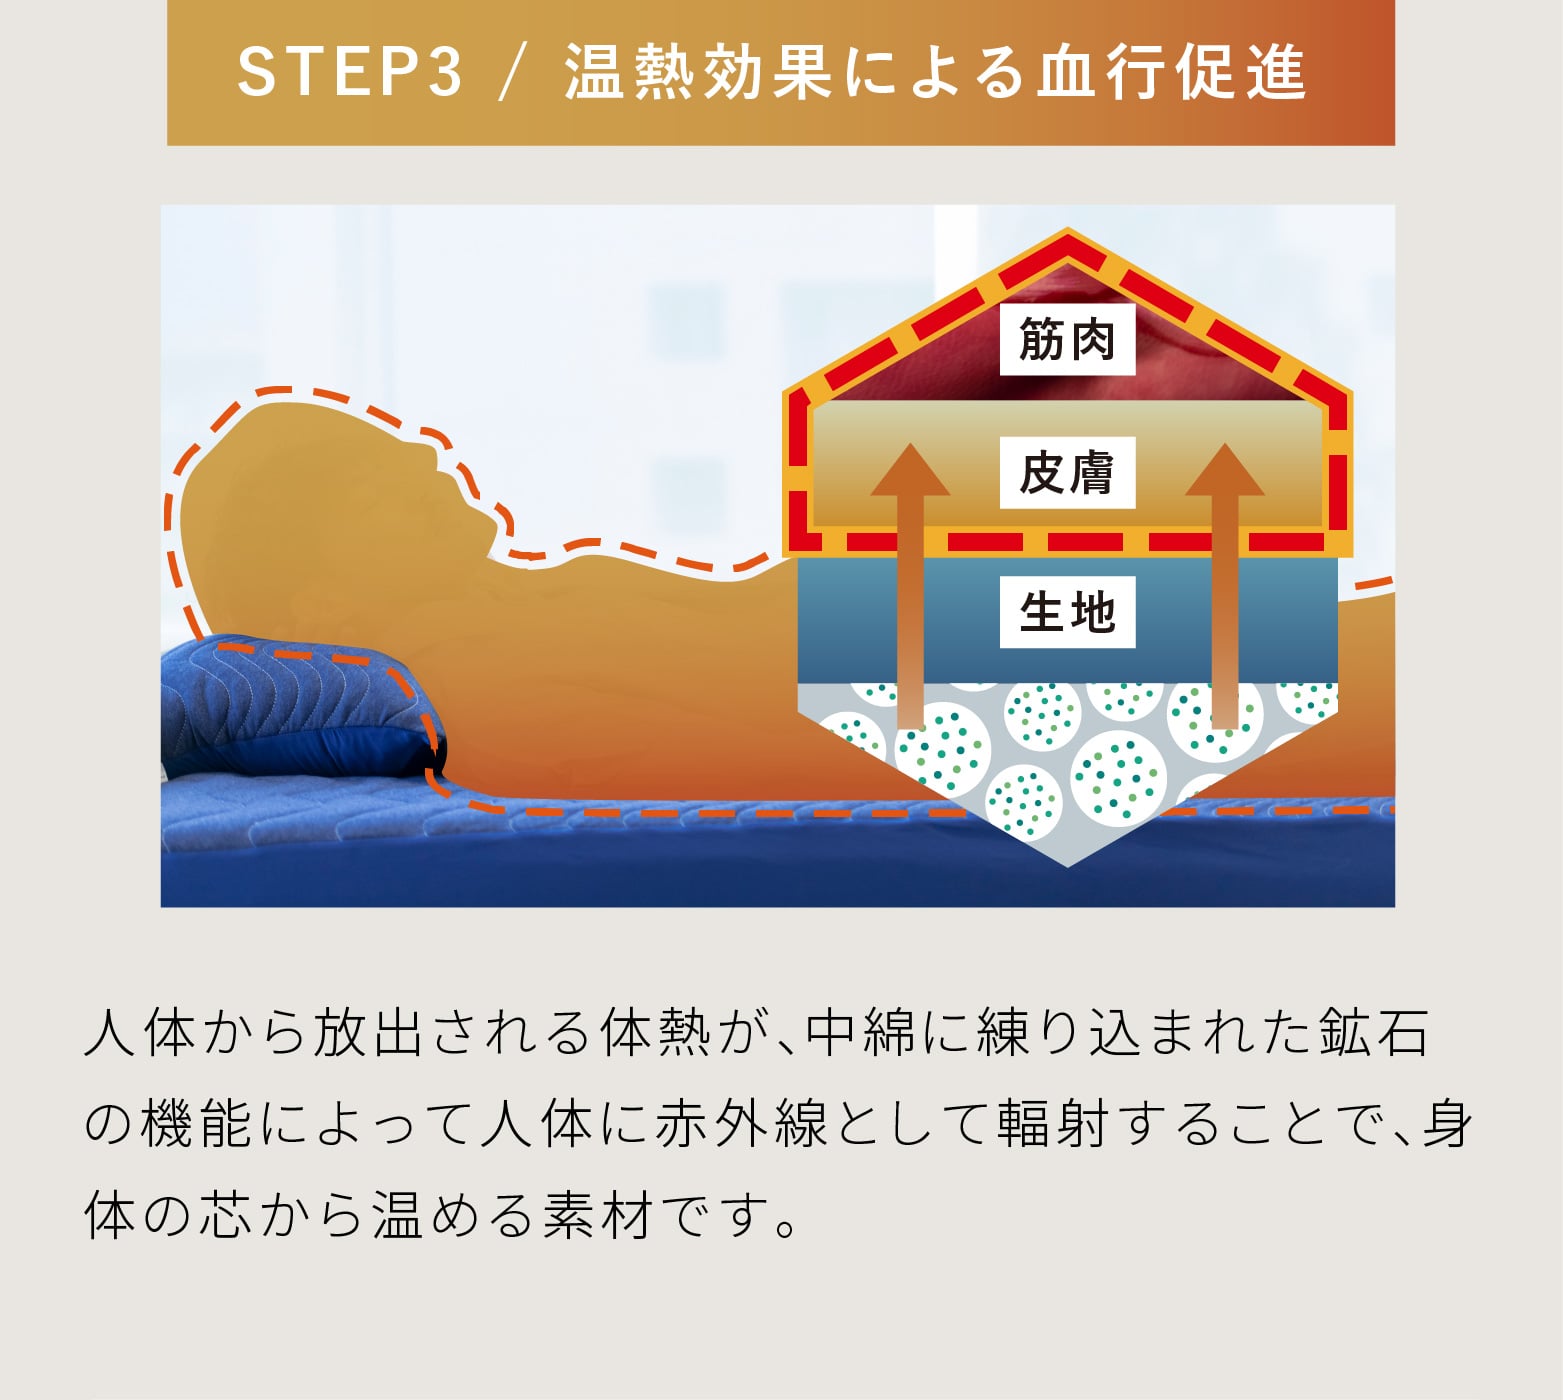 STEP3 / 温熱効果による血行促進